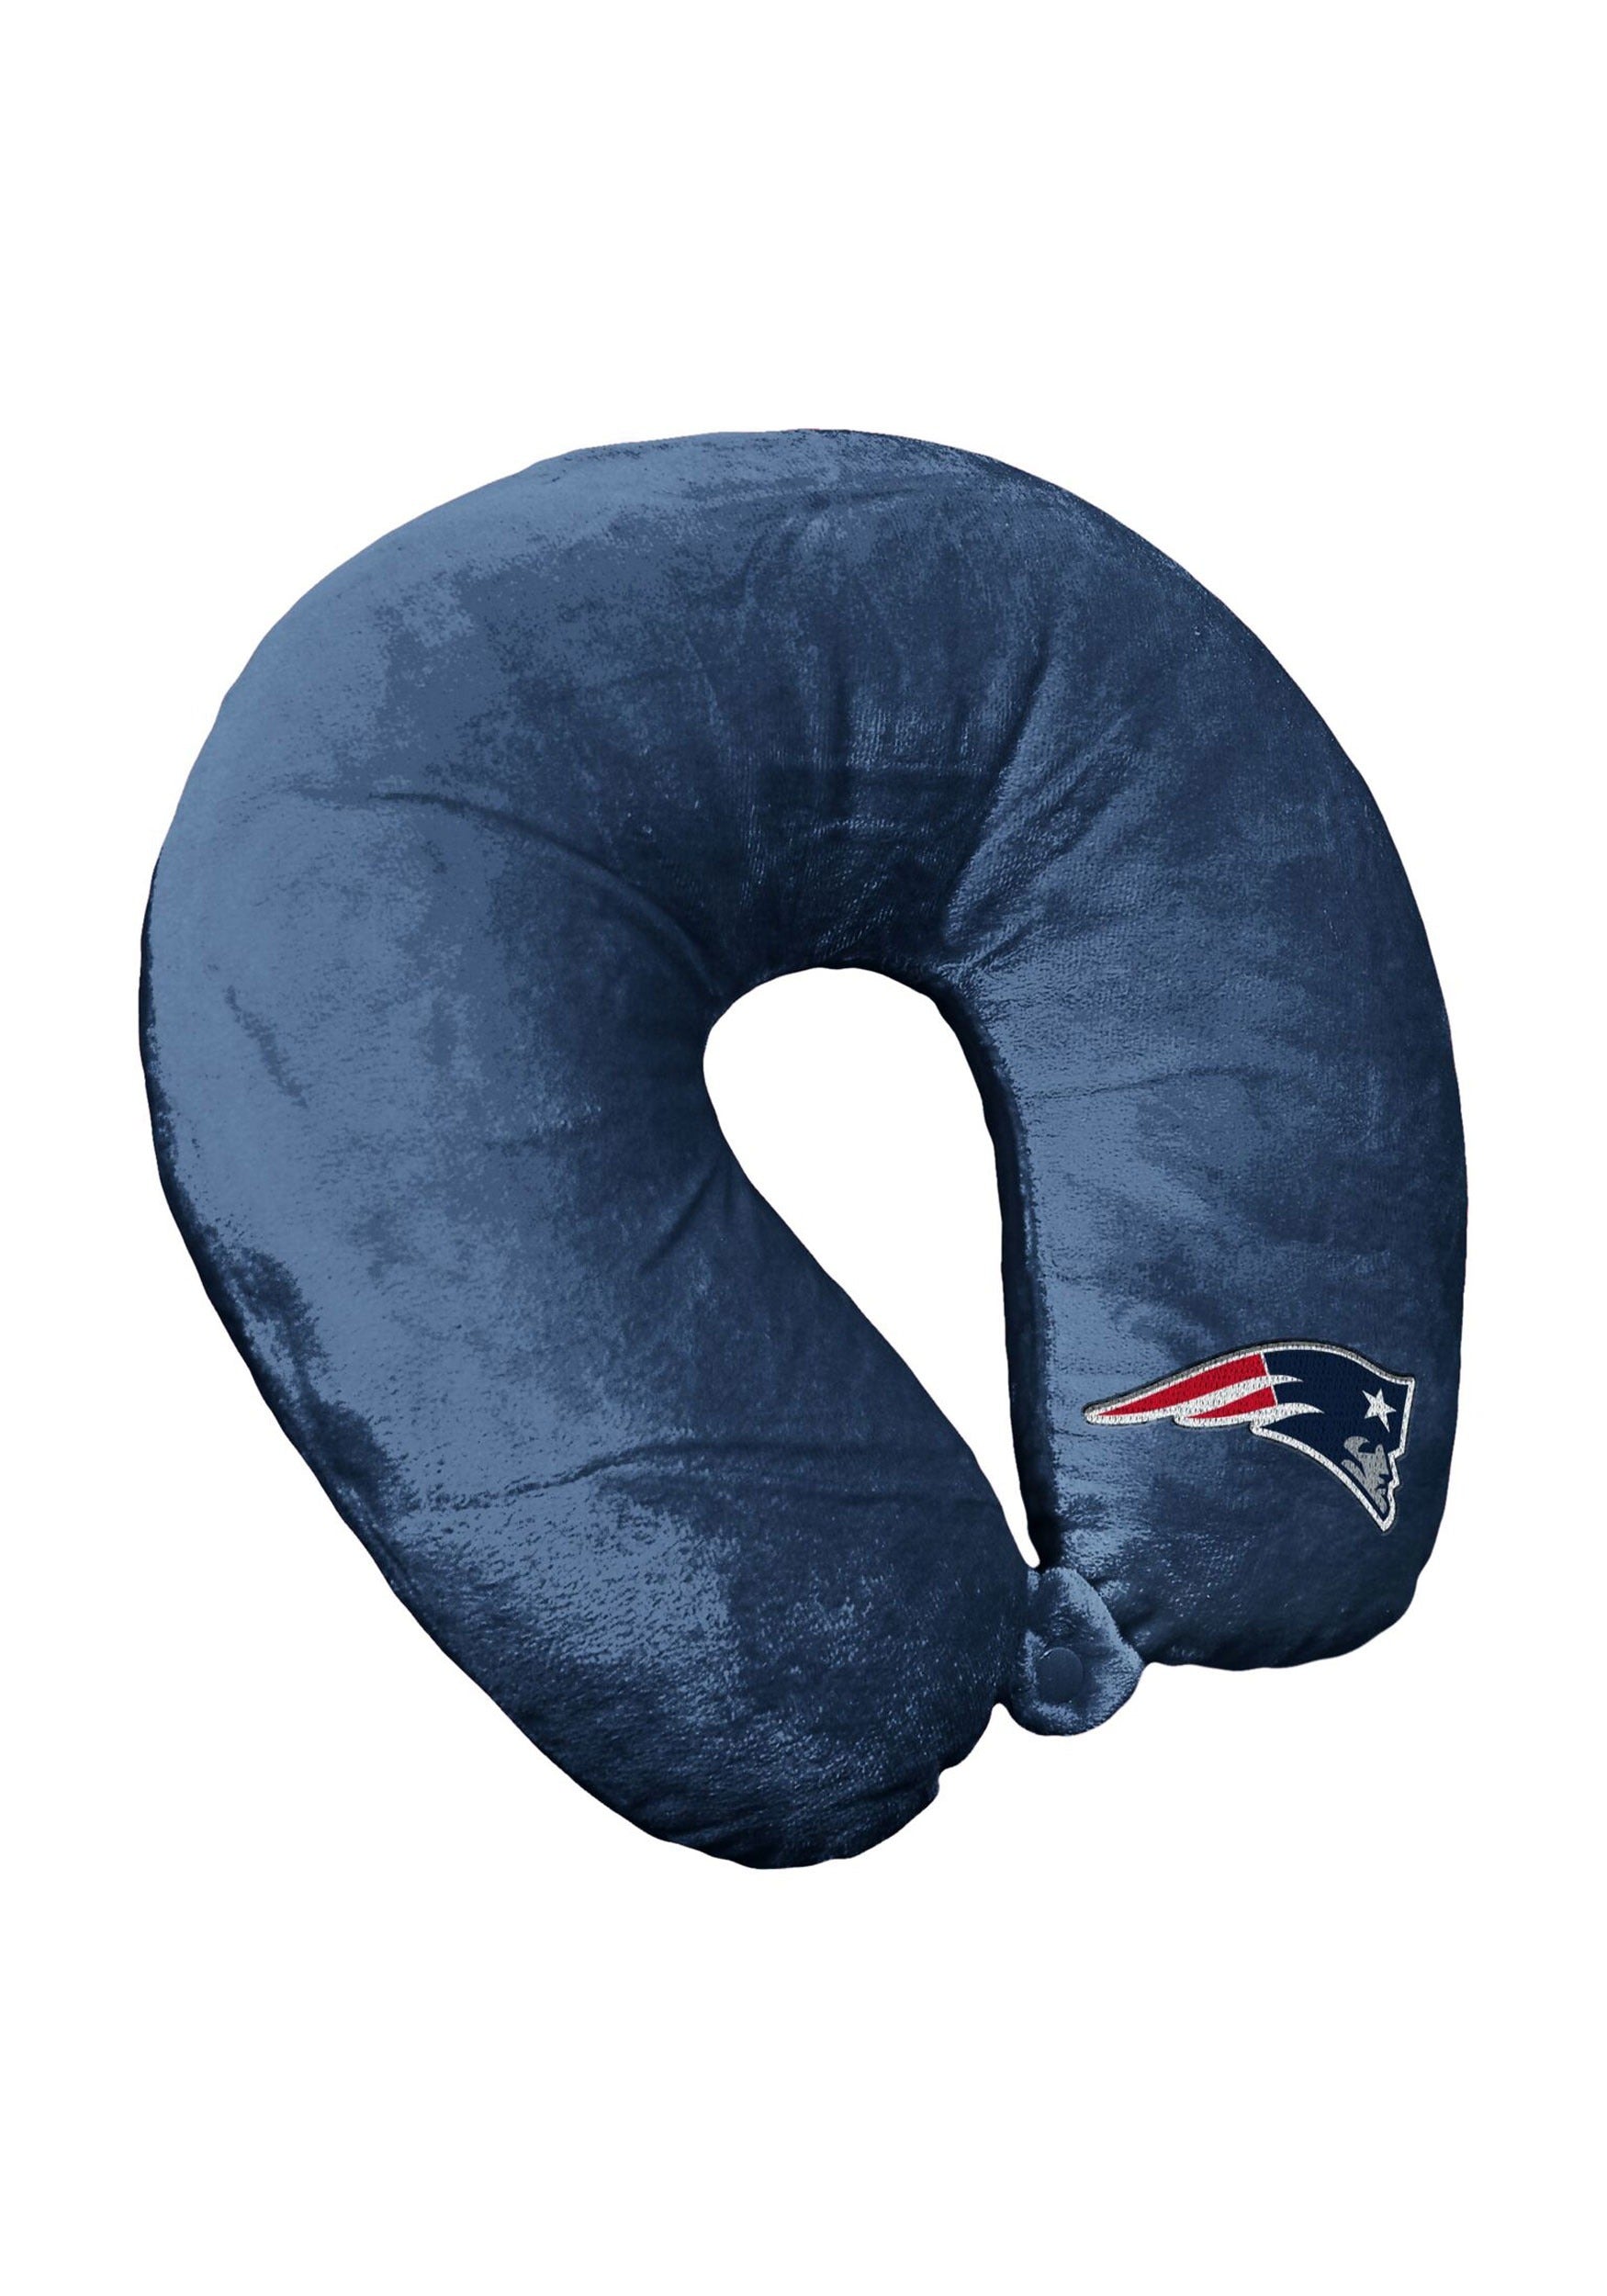 New England Patriots Neck Pillow - AtlanticCoastSports